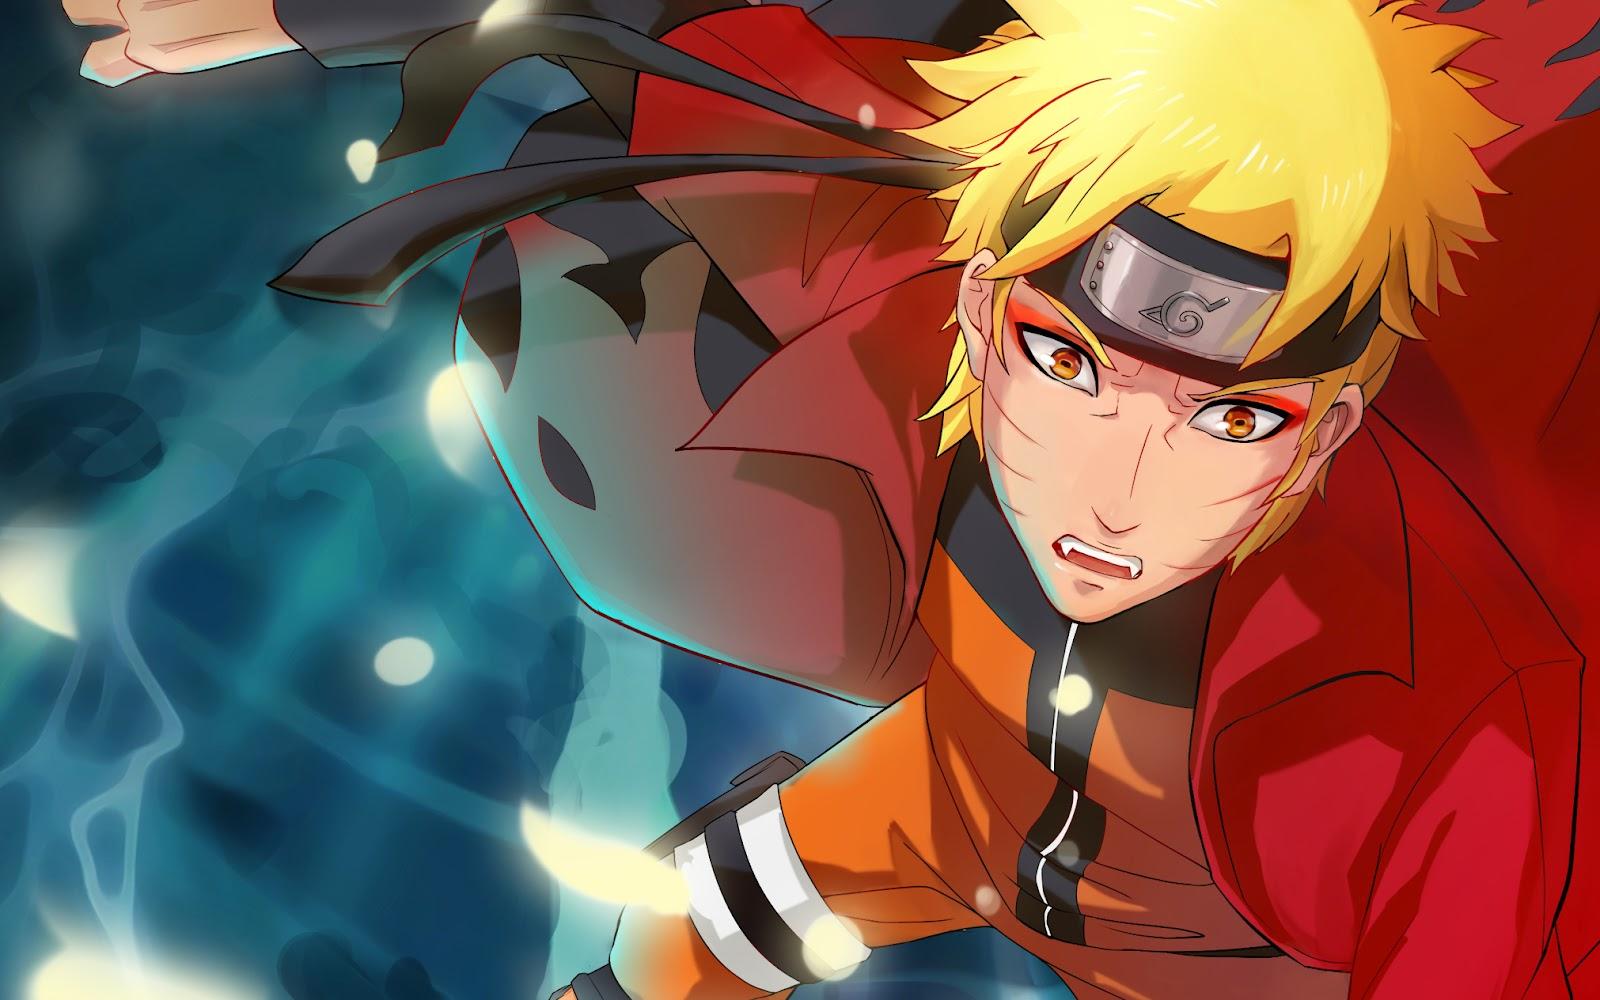 Anime Naruto Shippuden HD Image Wallpaper for iPad Air 2